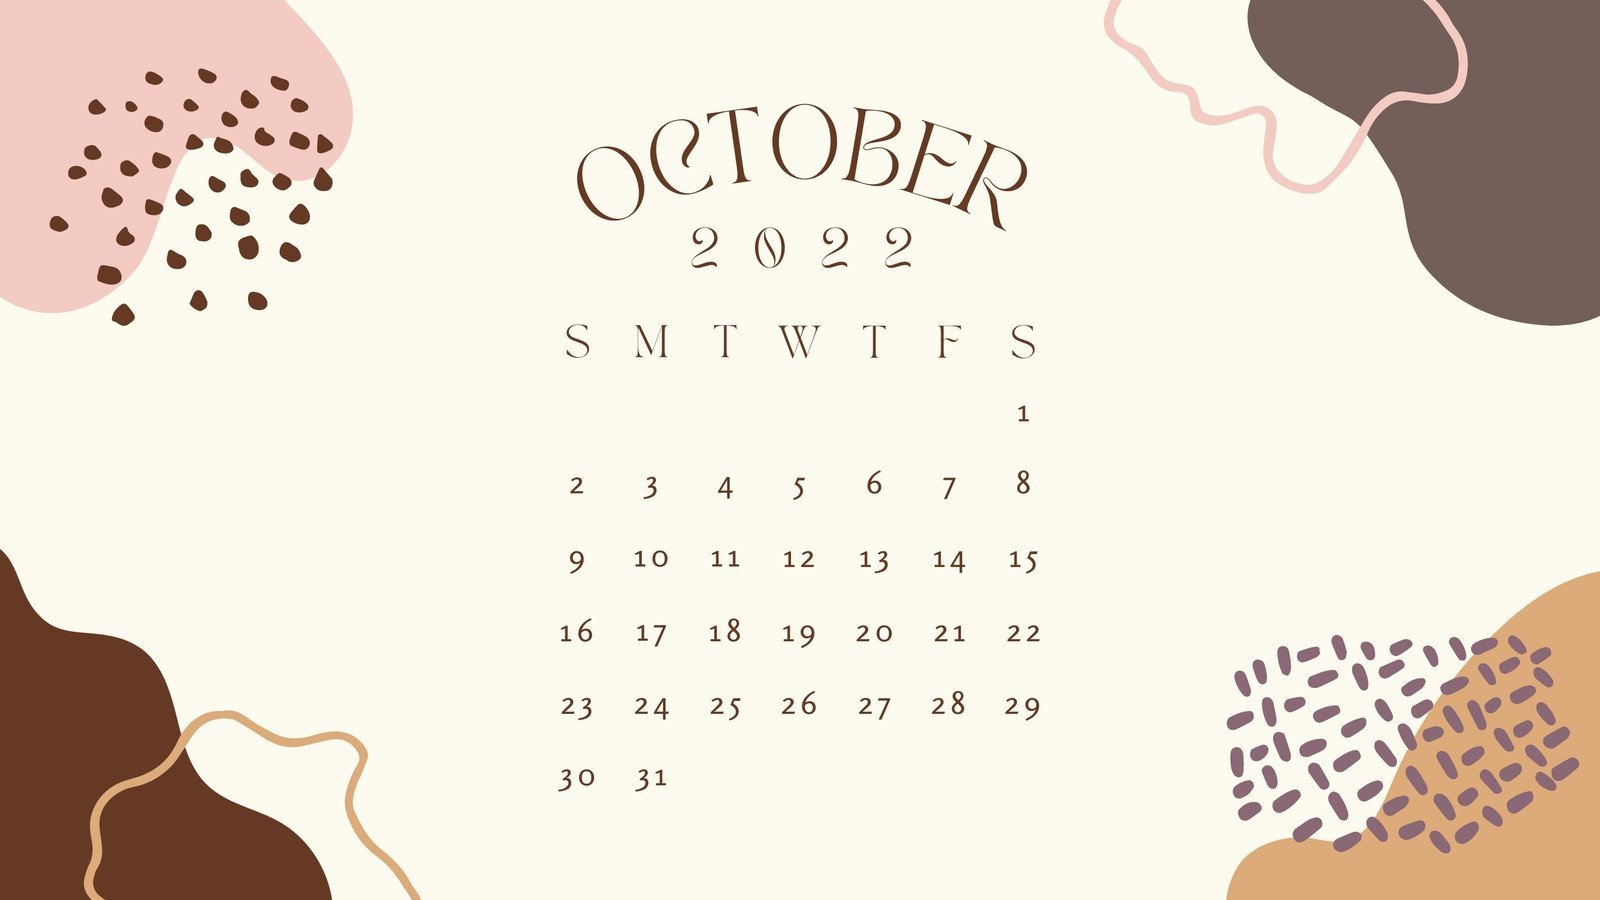 October 2022 calendar Wallpaper Free October 2022 calendar Background